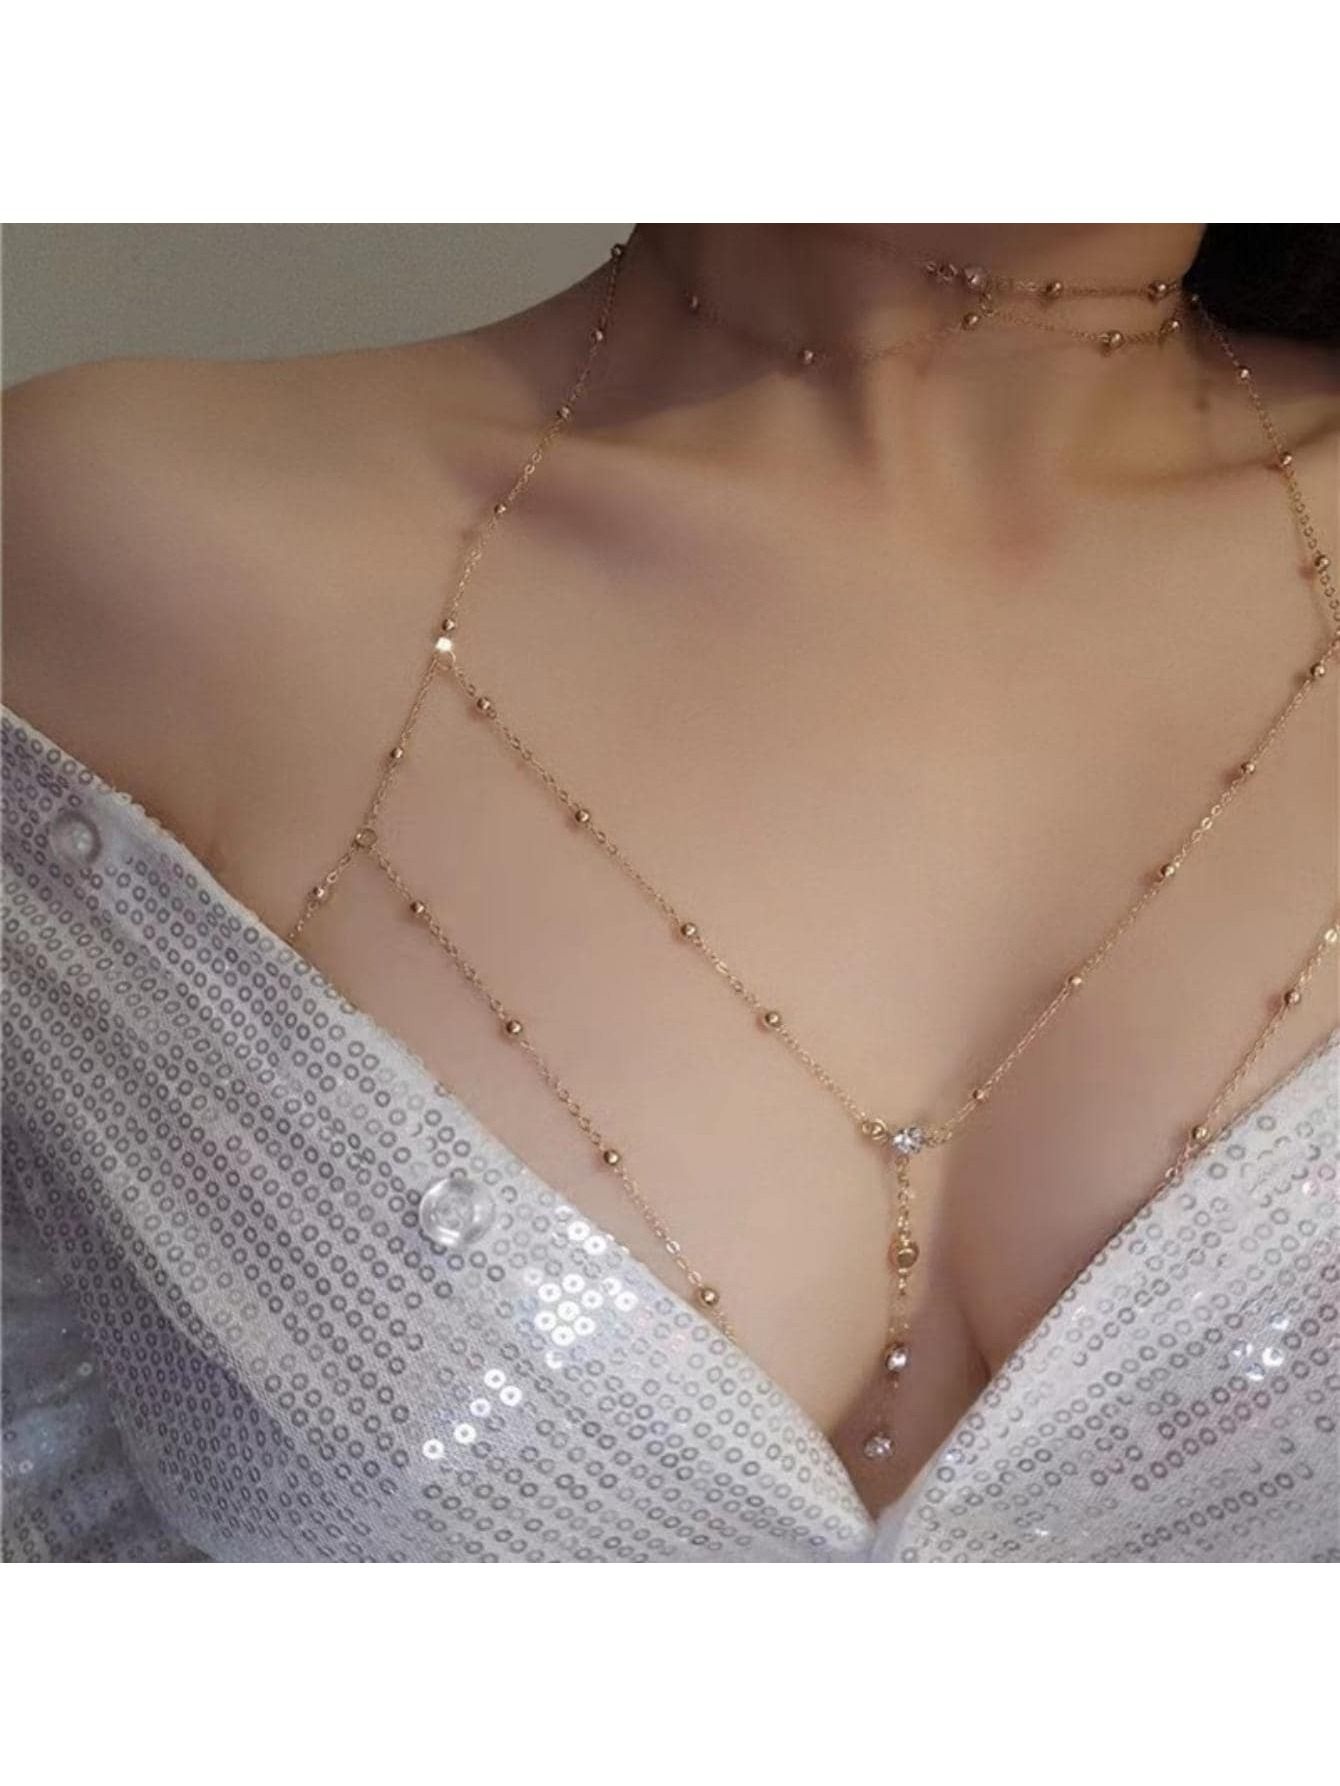 Fashionable Beaded Body Chain With Rhinestone Pendant For Women, Stylish Trendy Body Jewelry | SHEIN